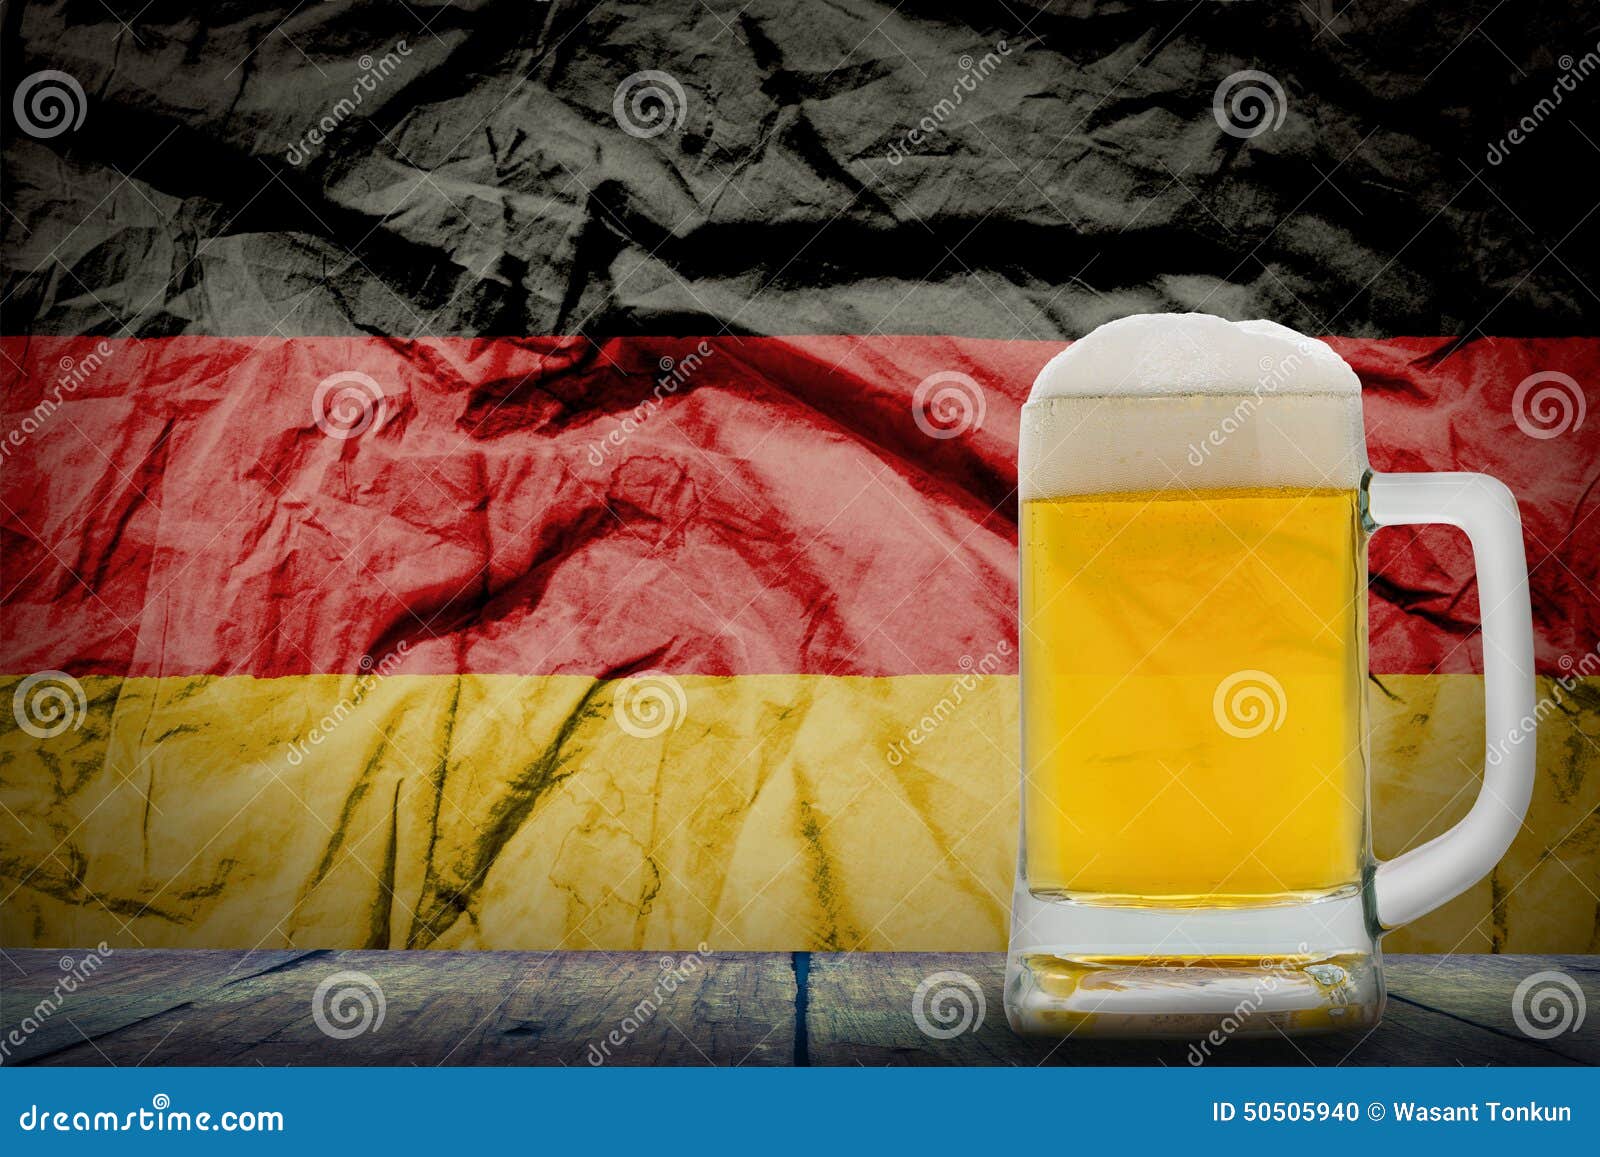 Ook betaling verhaal Bier van Duitsland stock foto. Image of ontwerp, vlag - 50505940